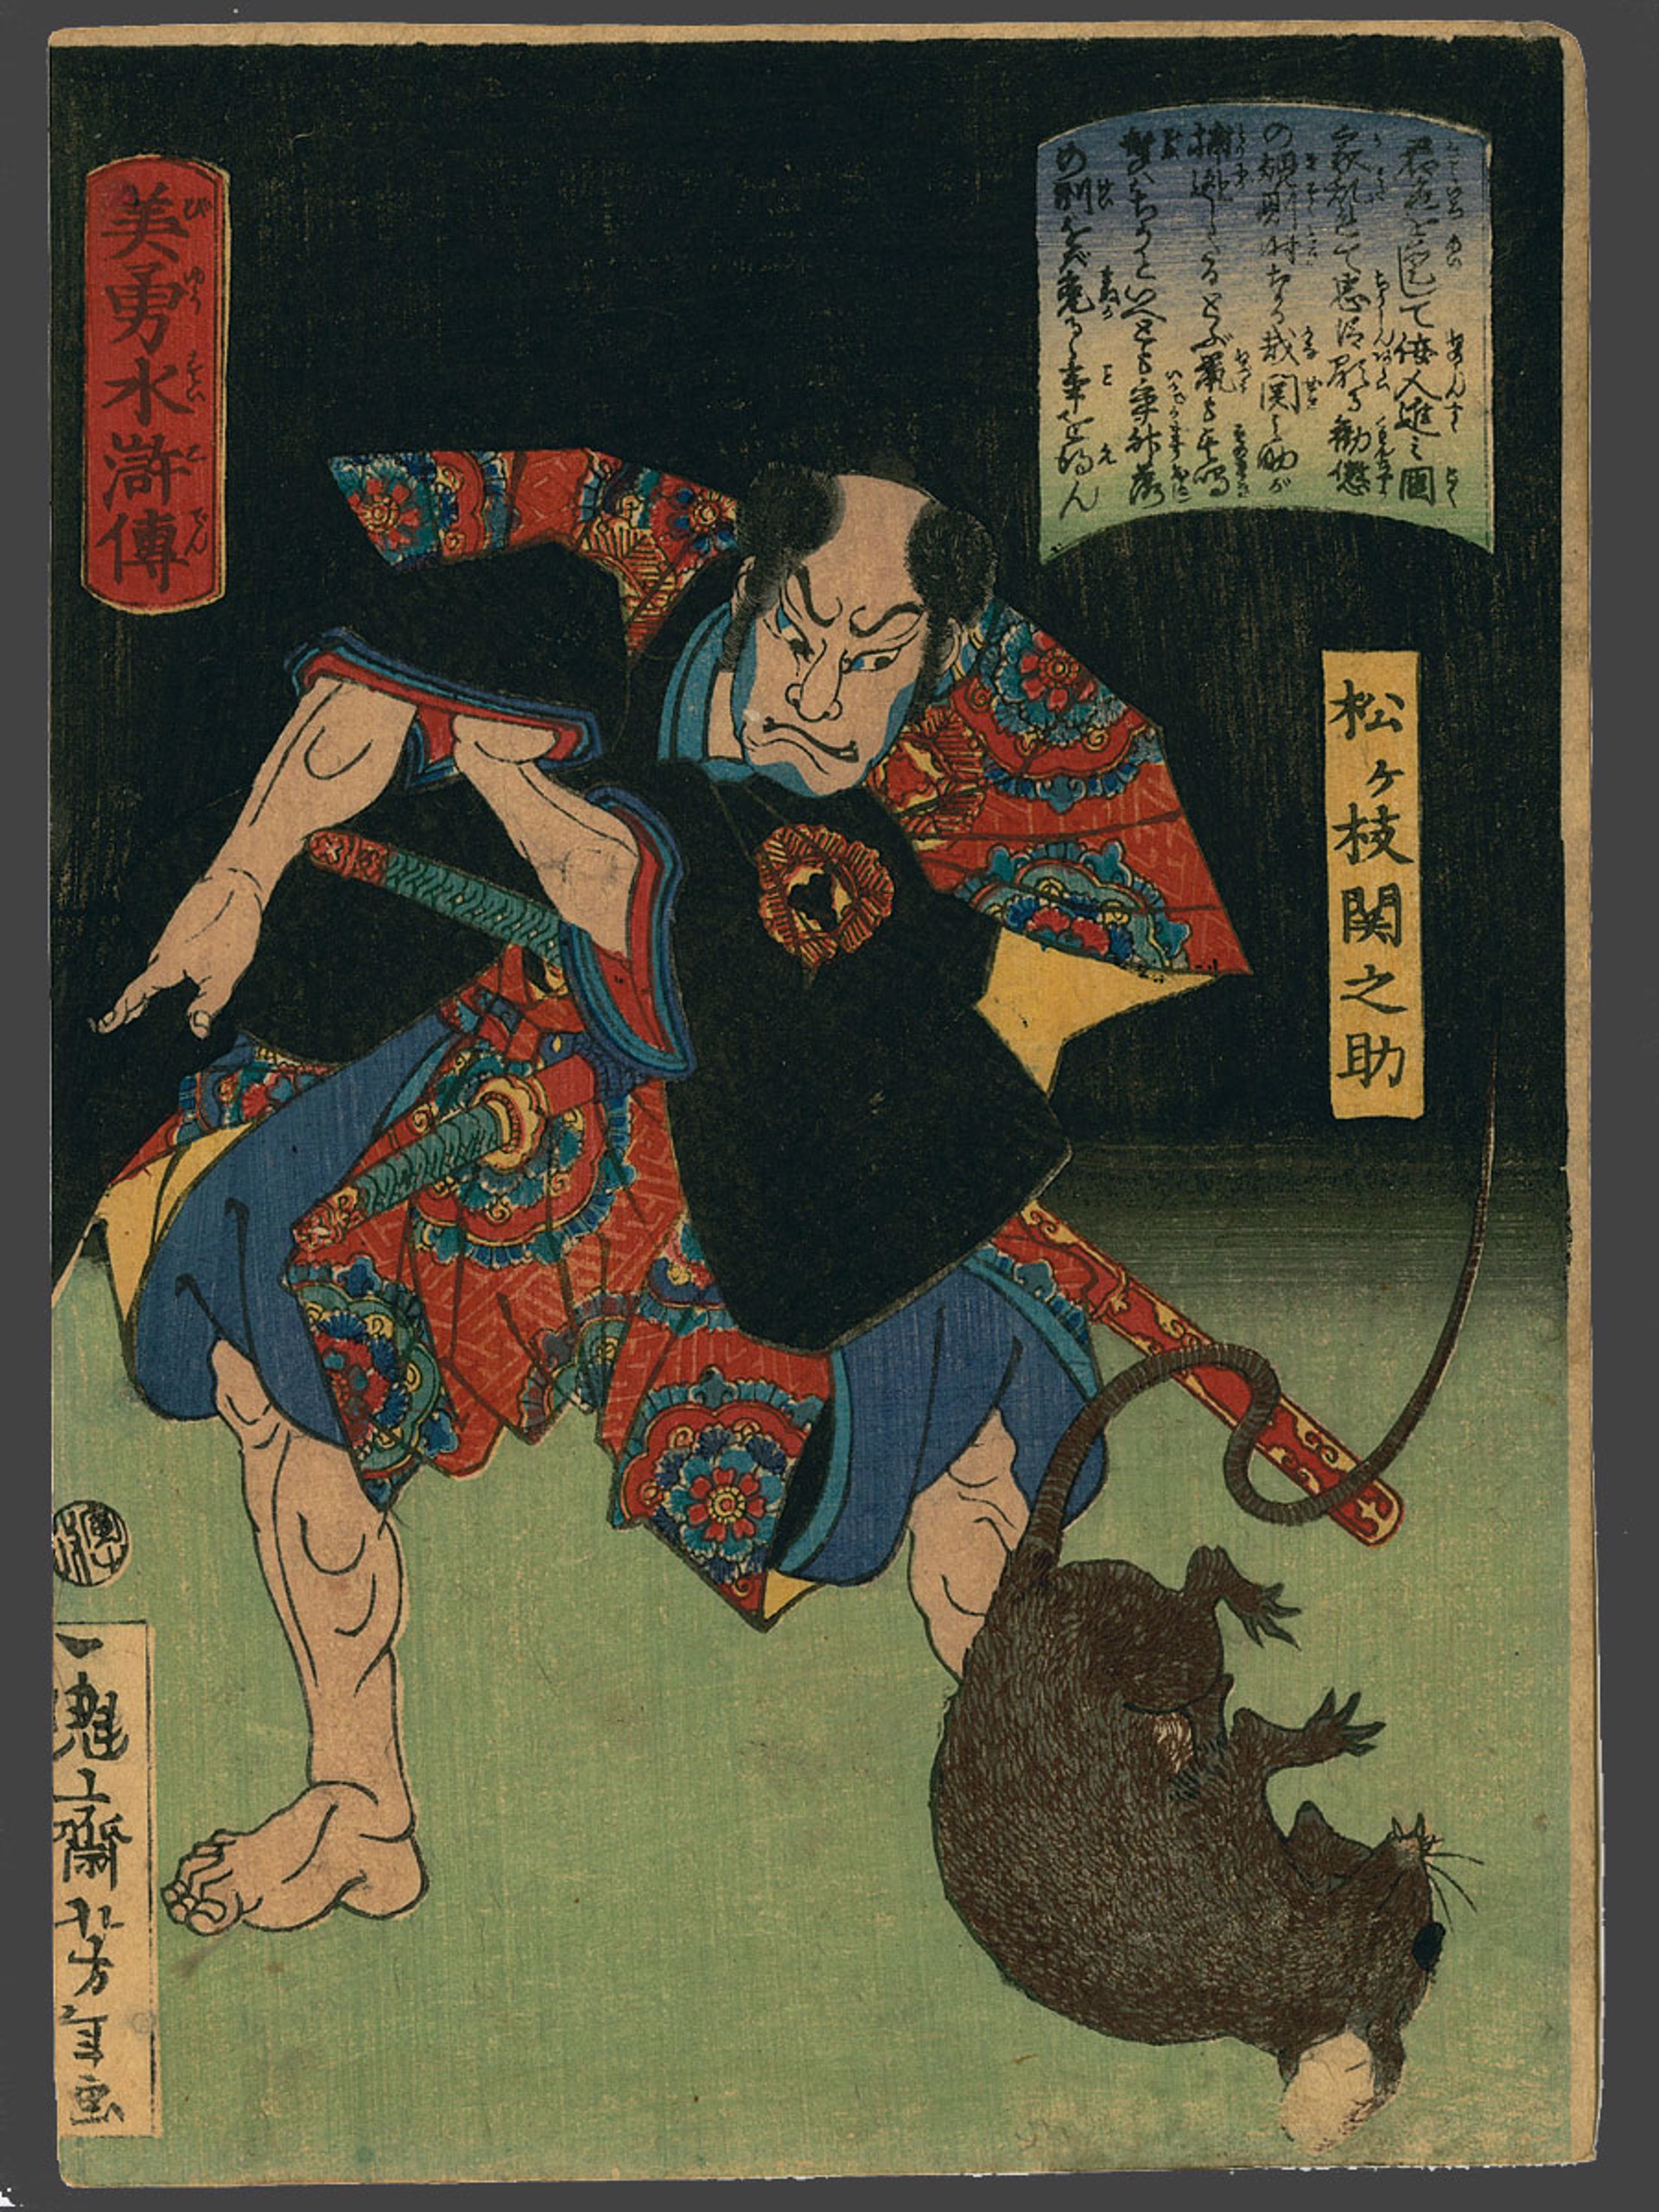 #16, Matsugae Sekinosuke Glowering at a Rat Biyu Suikoden (Beauty and Valor in Tales of the Water Margin) by Yoshitoshi